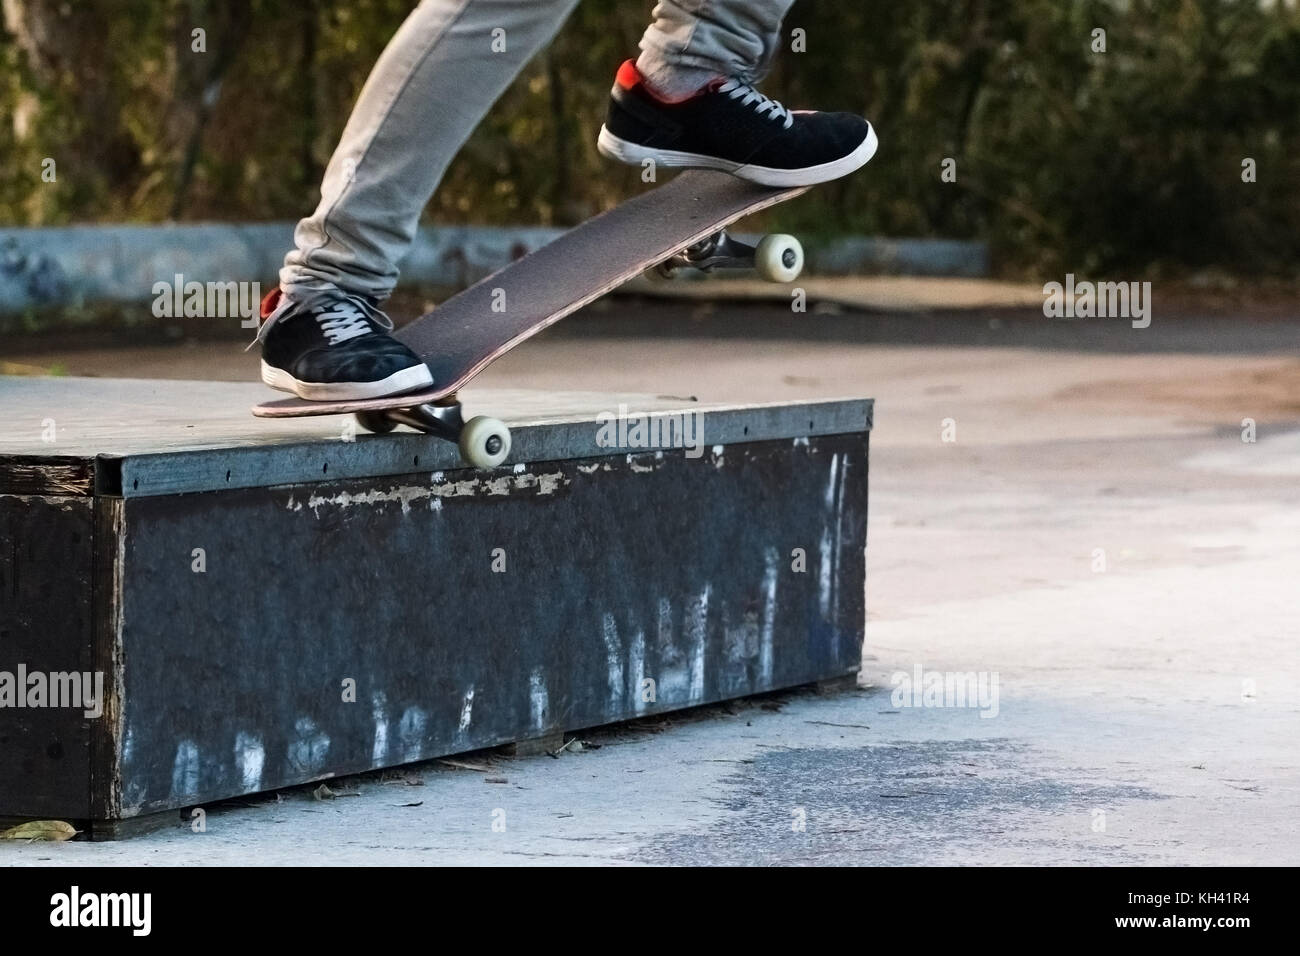 Spectacular evolution, skateboard nose grind trick Stock Photo - Alamy